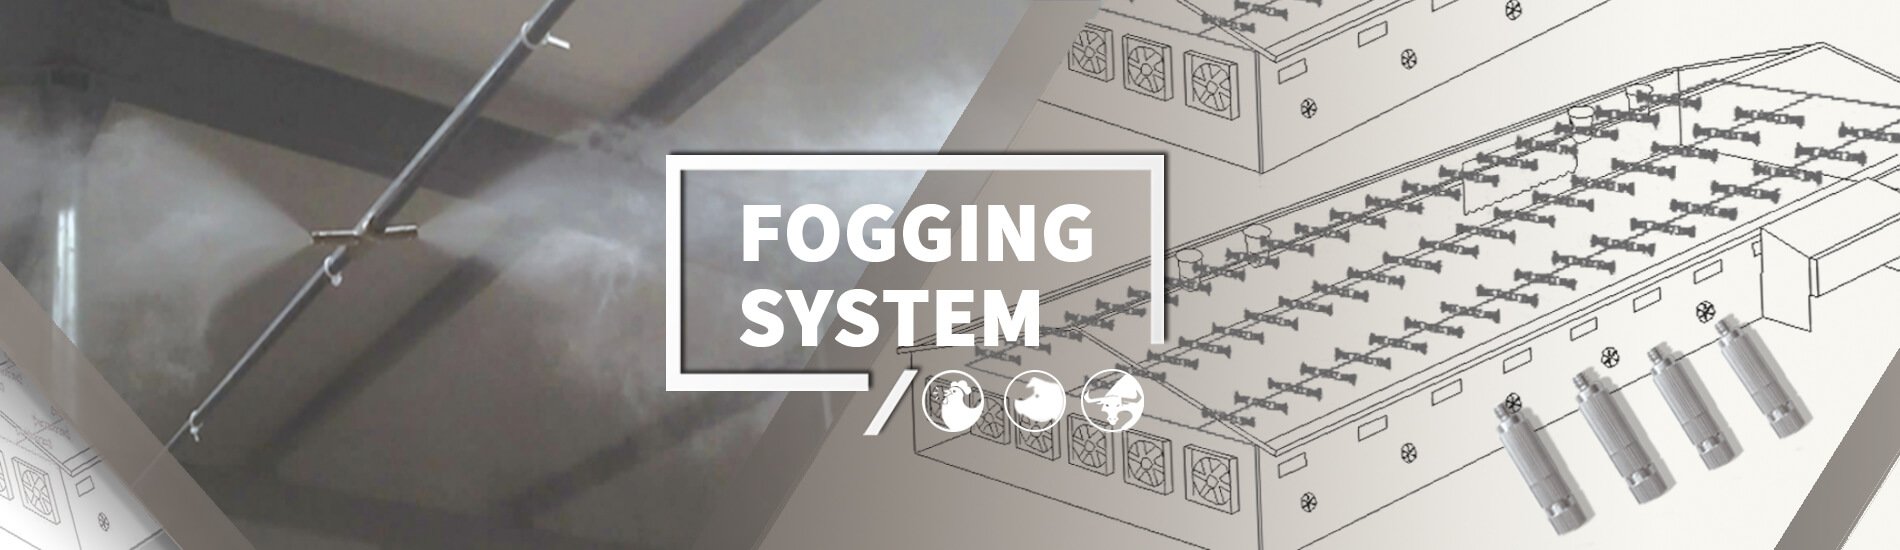 Fogging system